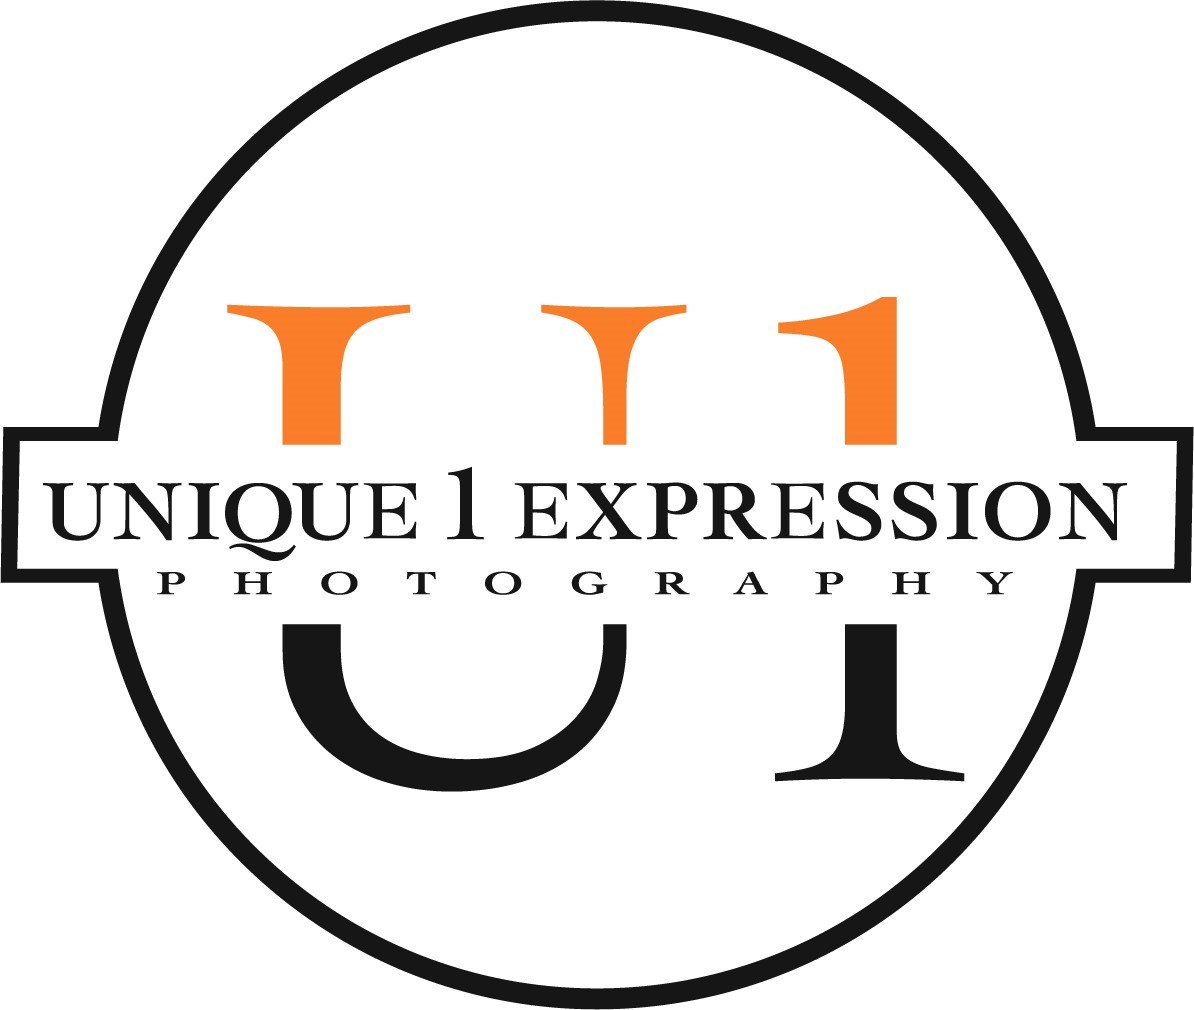 Unique1expression Photography